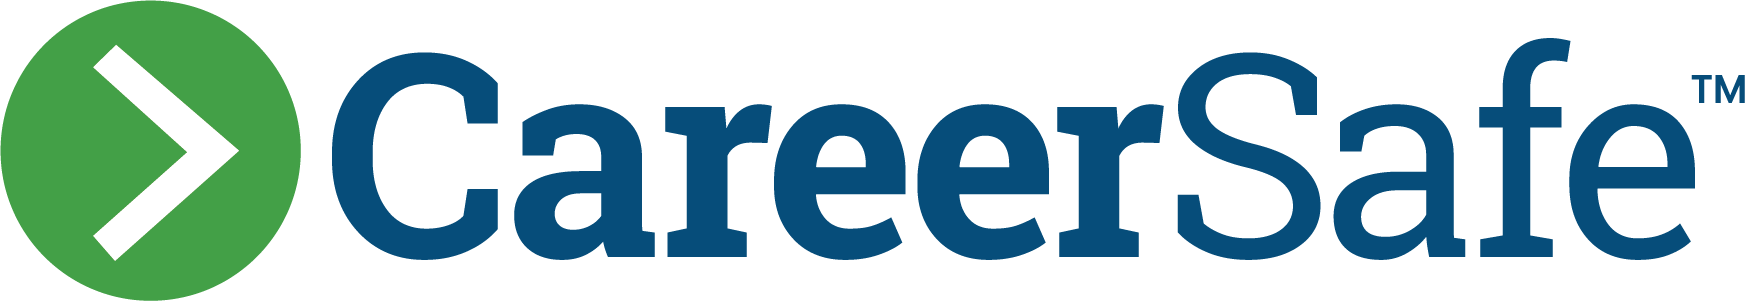 CareerSafe Online logo